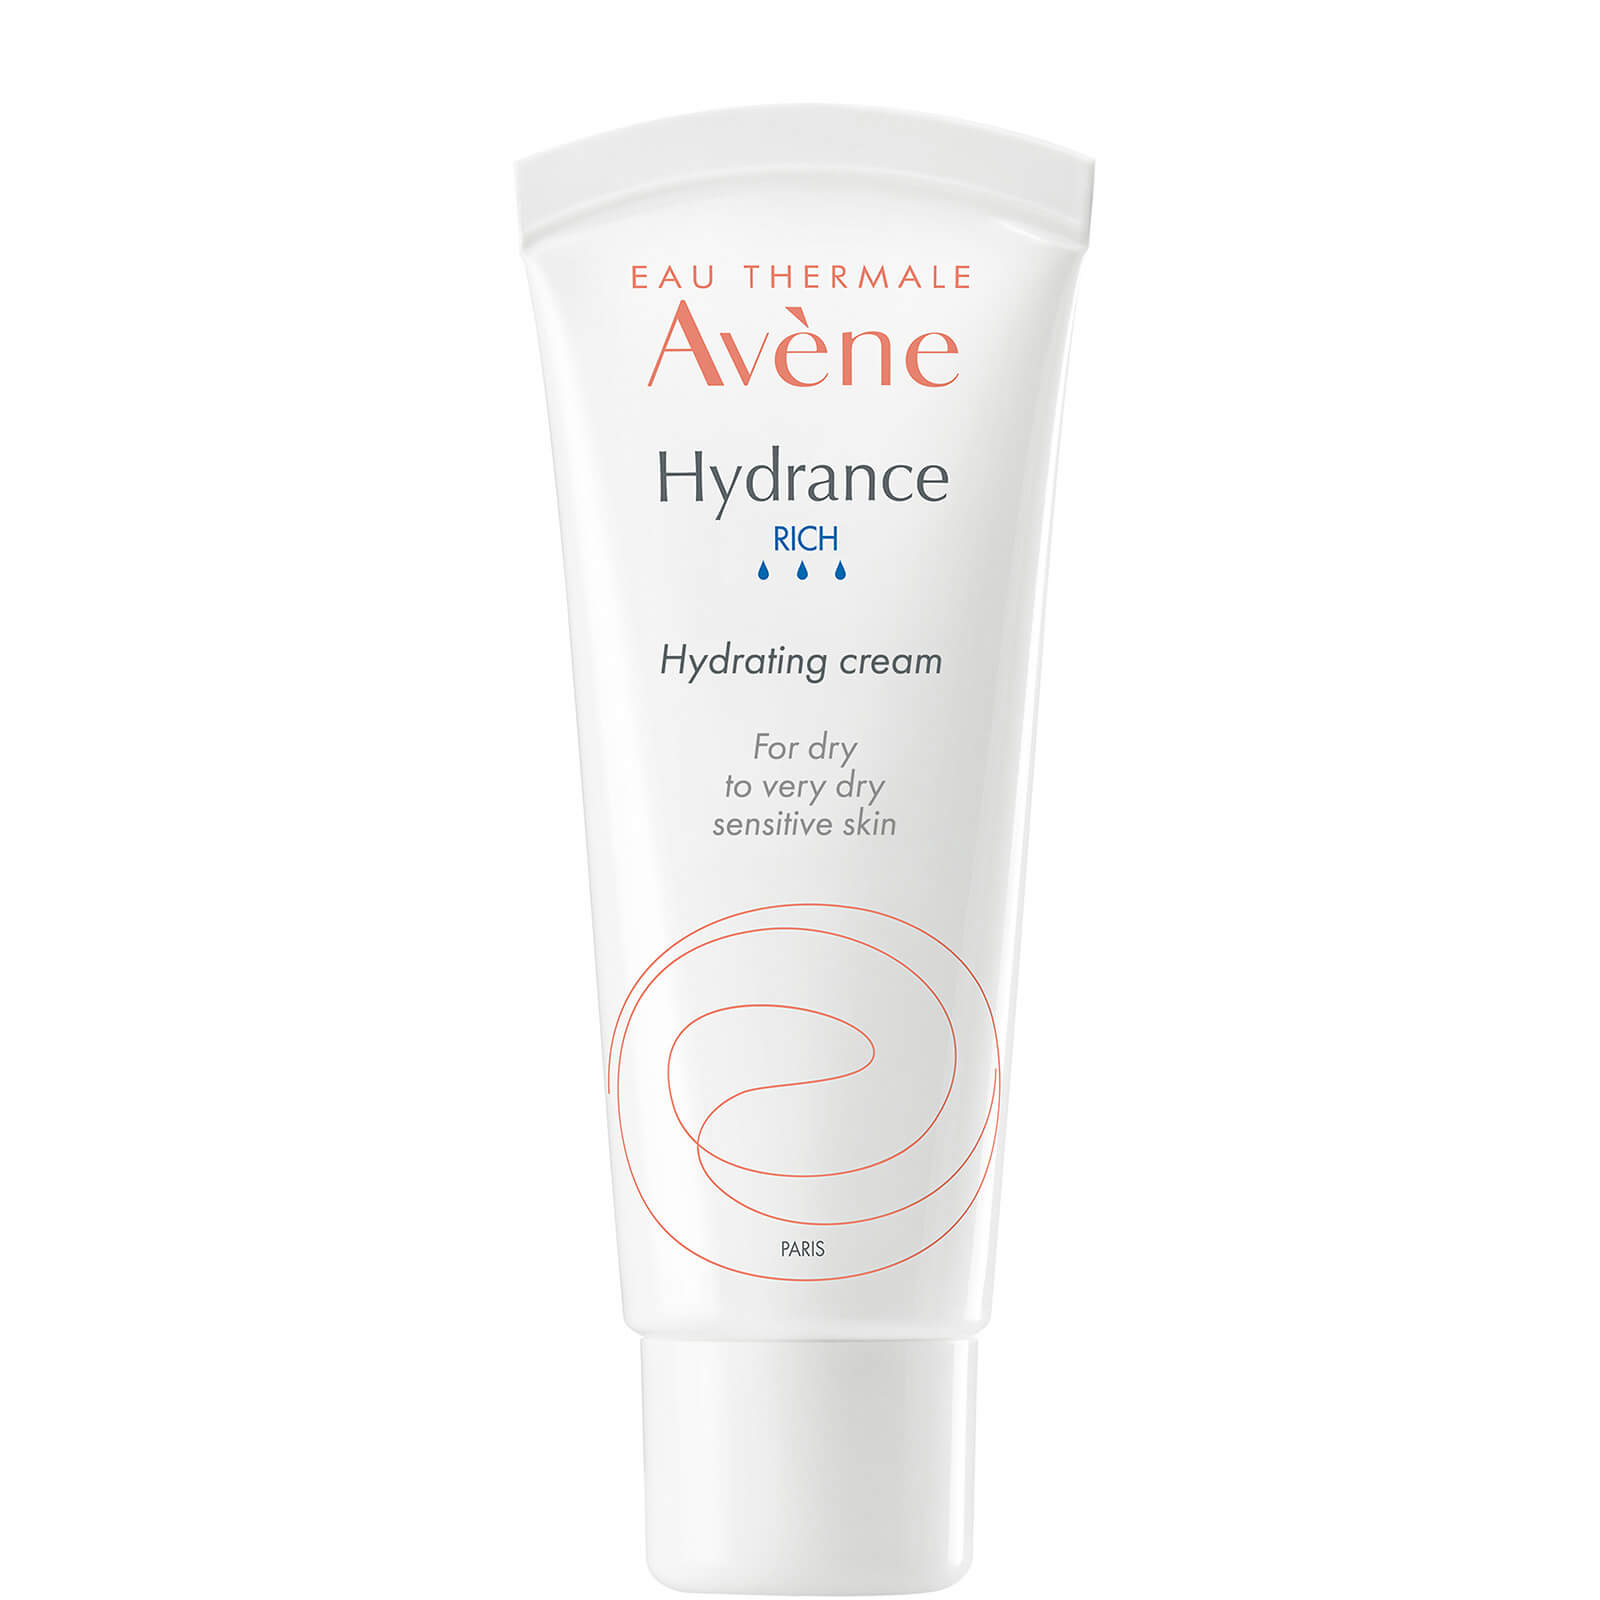 Avene Hydrance Rich Hydrating Cream Moisturiser for Dehydrated Skin 40ml